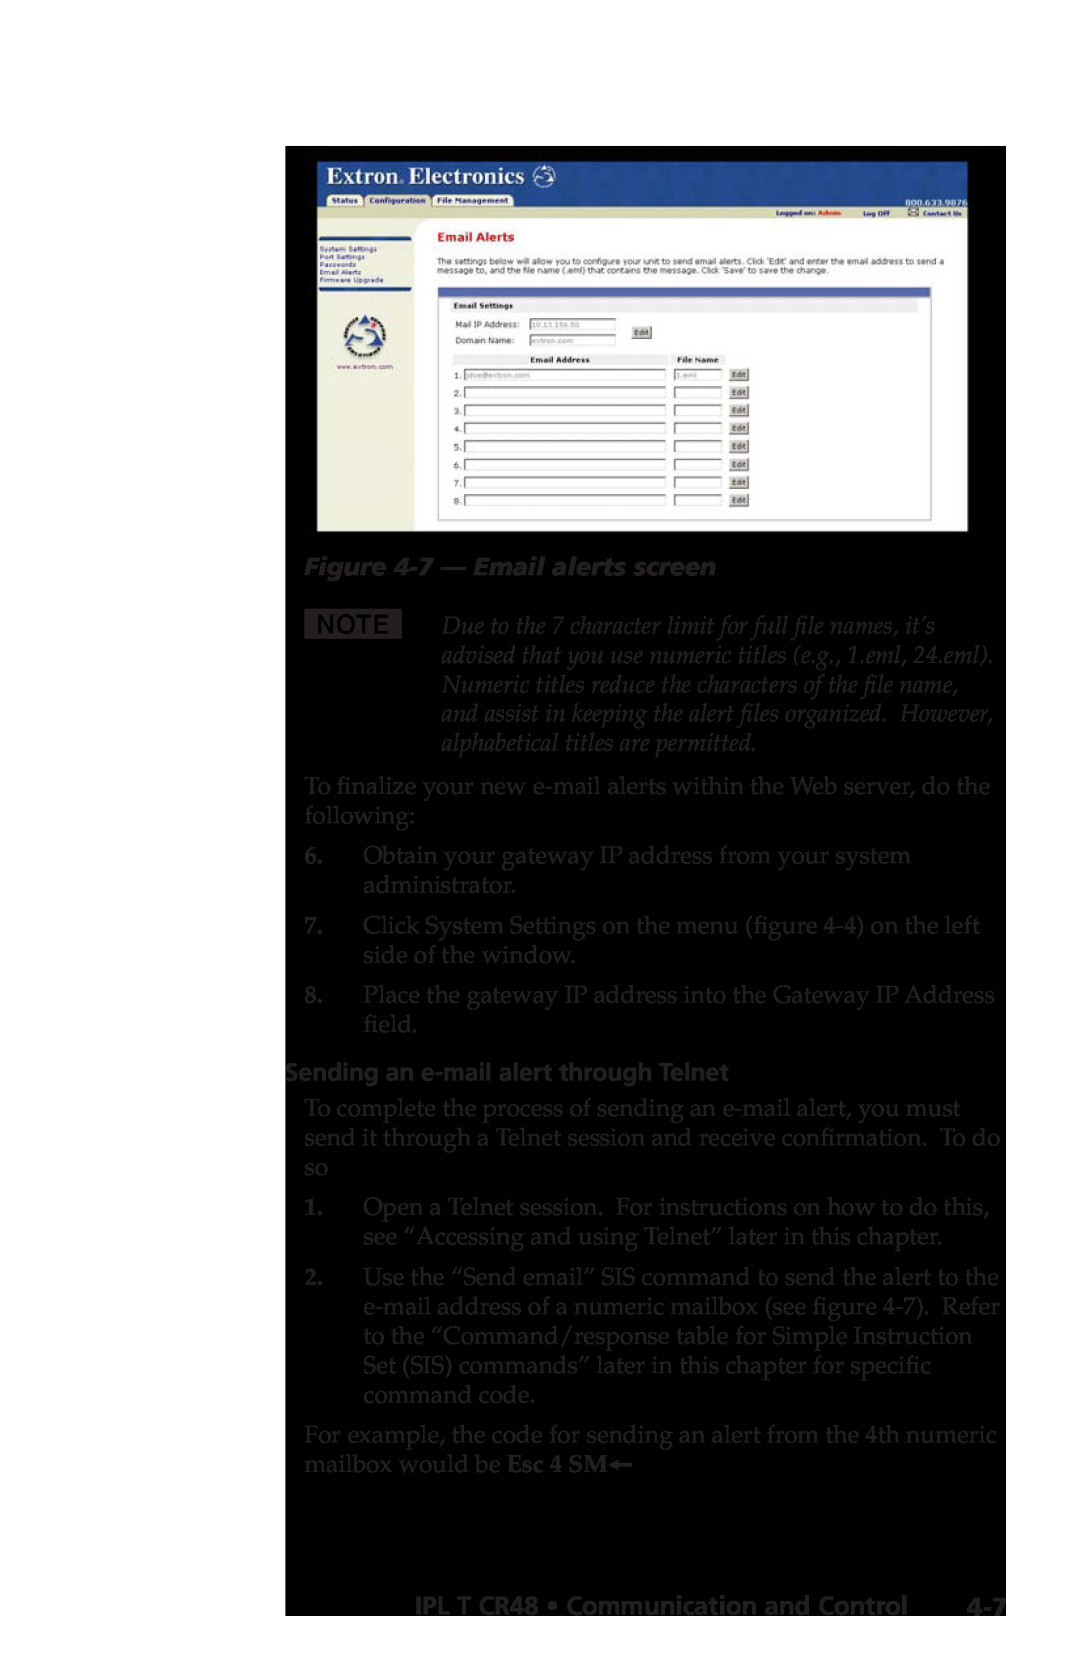 Extron electronic IPL T CR48 manual 7 - Email alerts screen, Sending an e-mail alert through Telnet 